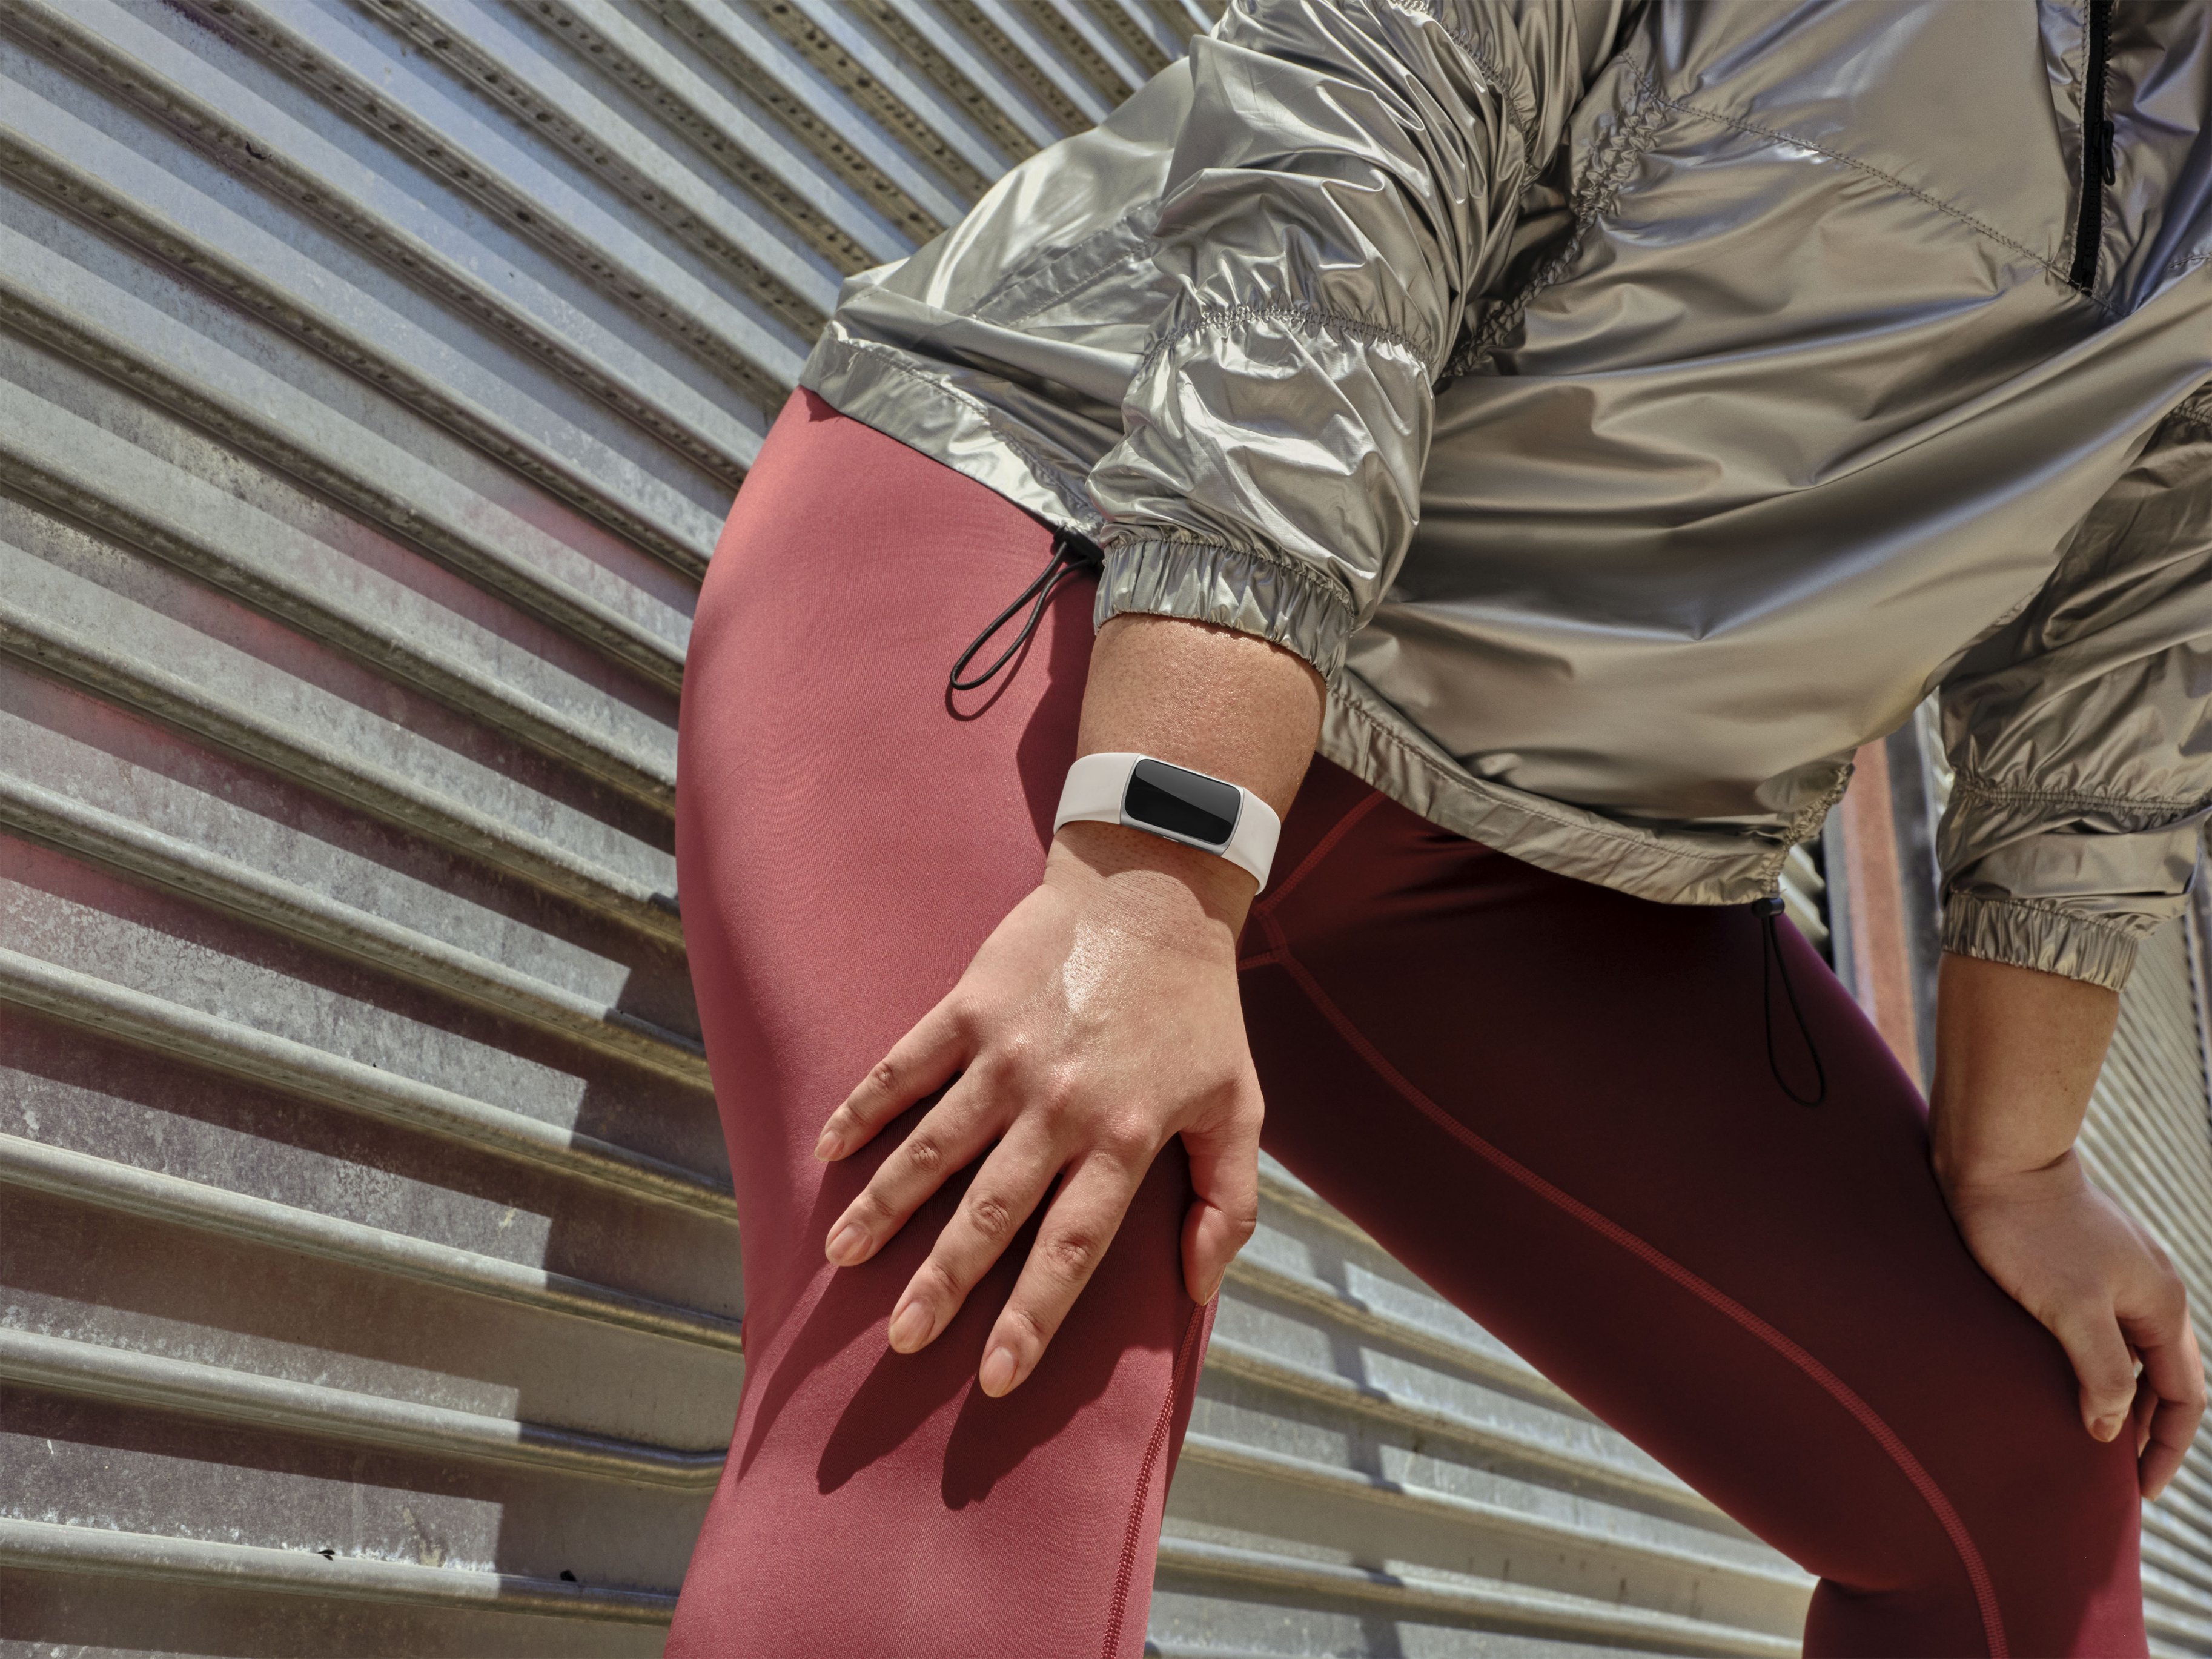 Fitbit Charge 6 Advanced Fitness & Health Tracker Porcelain GA05185-NA -  Best Buy